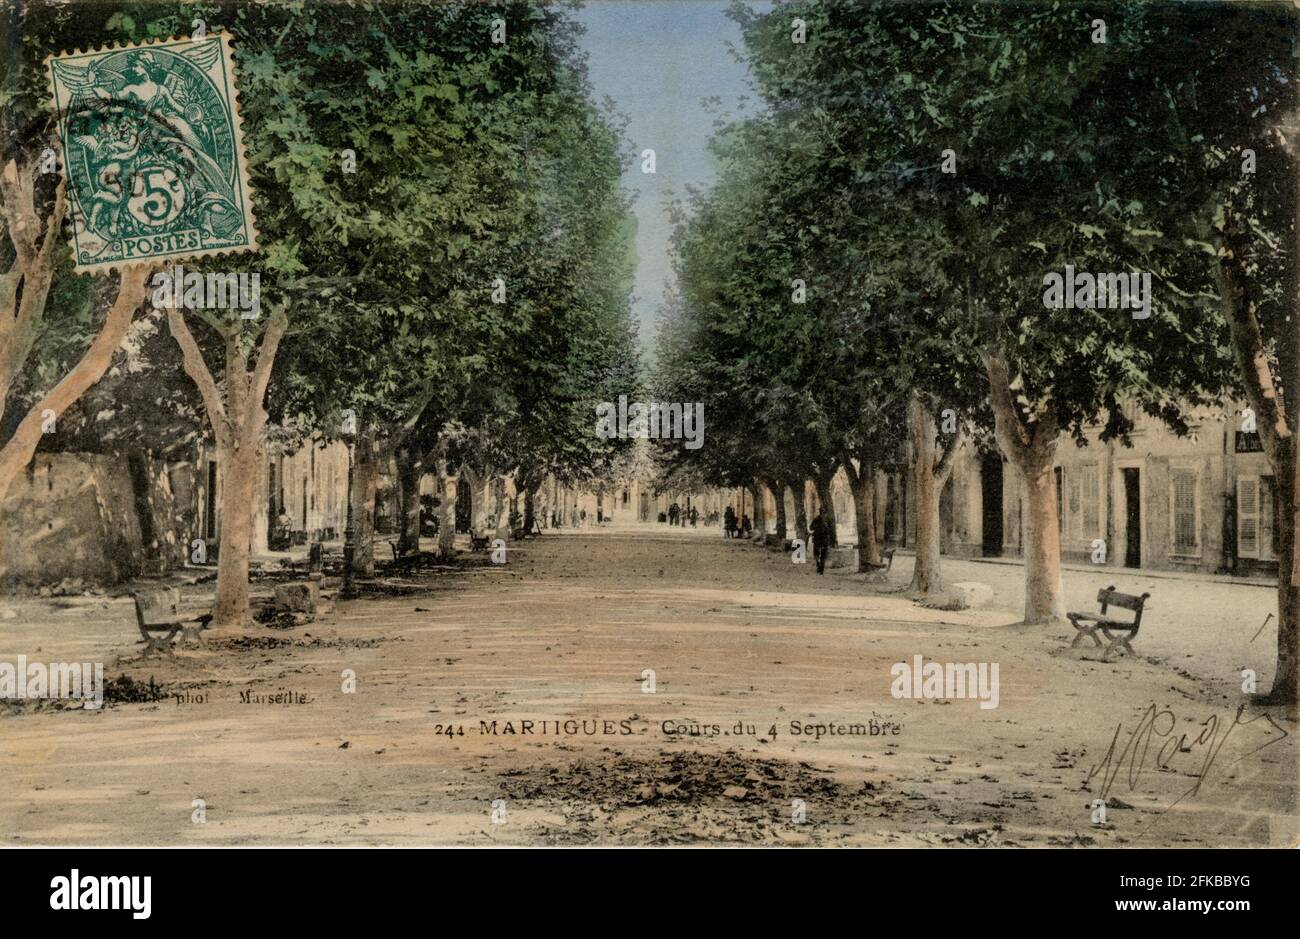 MARTIGUES. French department: 13 - Bouches-du-Rhône. Region: Provence-Alpes-Côte d'Azur. Postcard End of 19th century - beginning of 20th century Stock Photo